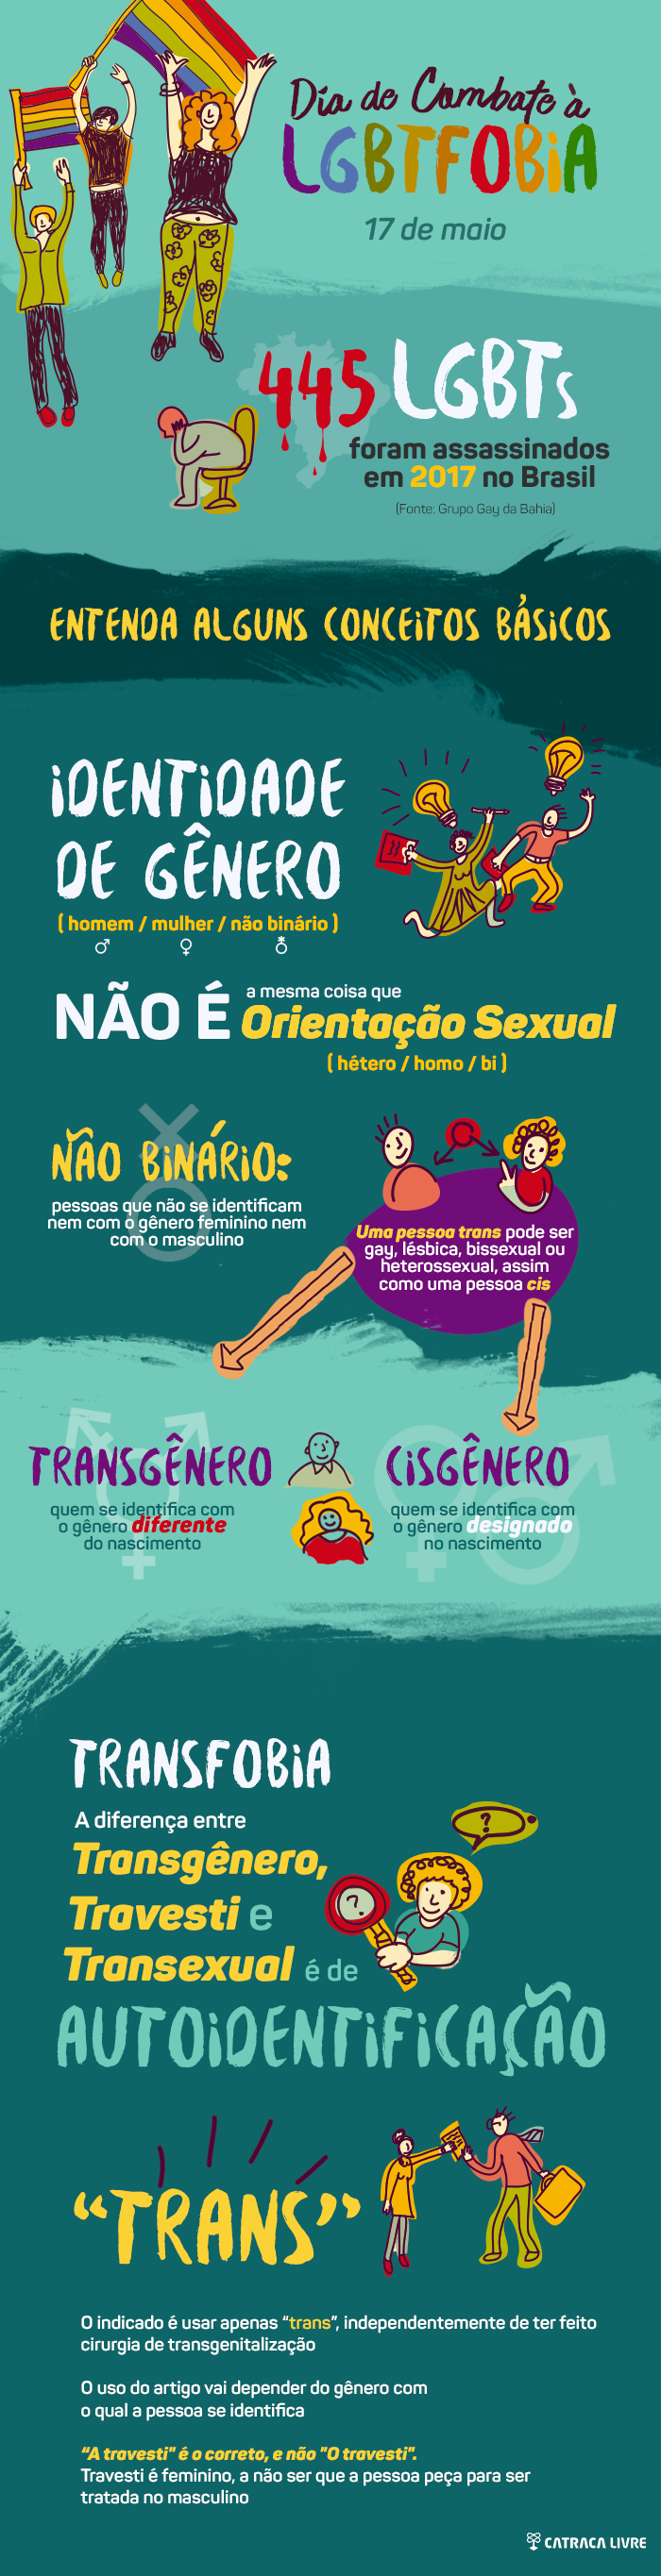 Infográfico explica conceitos básicos sobre a comunidade LGBT